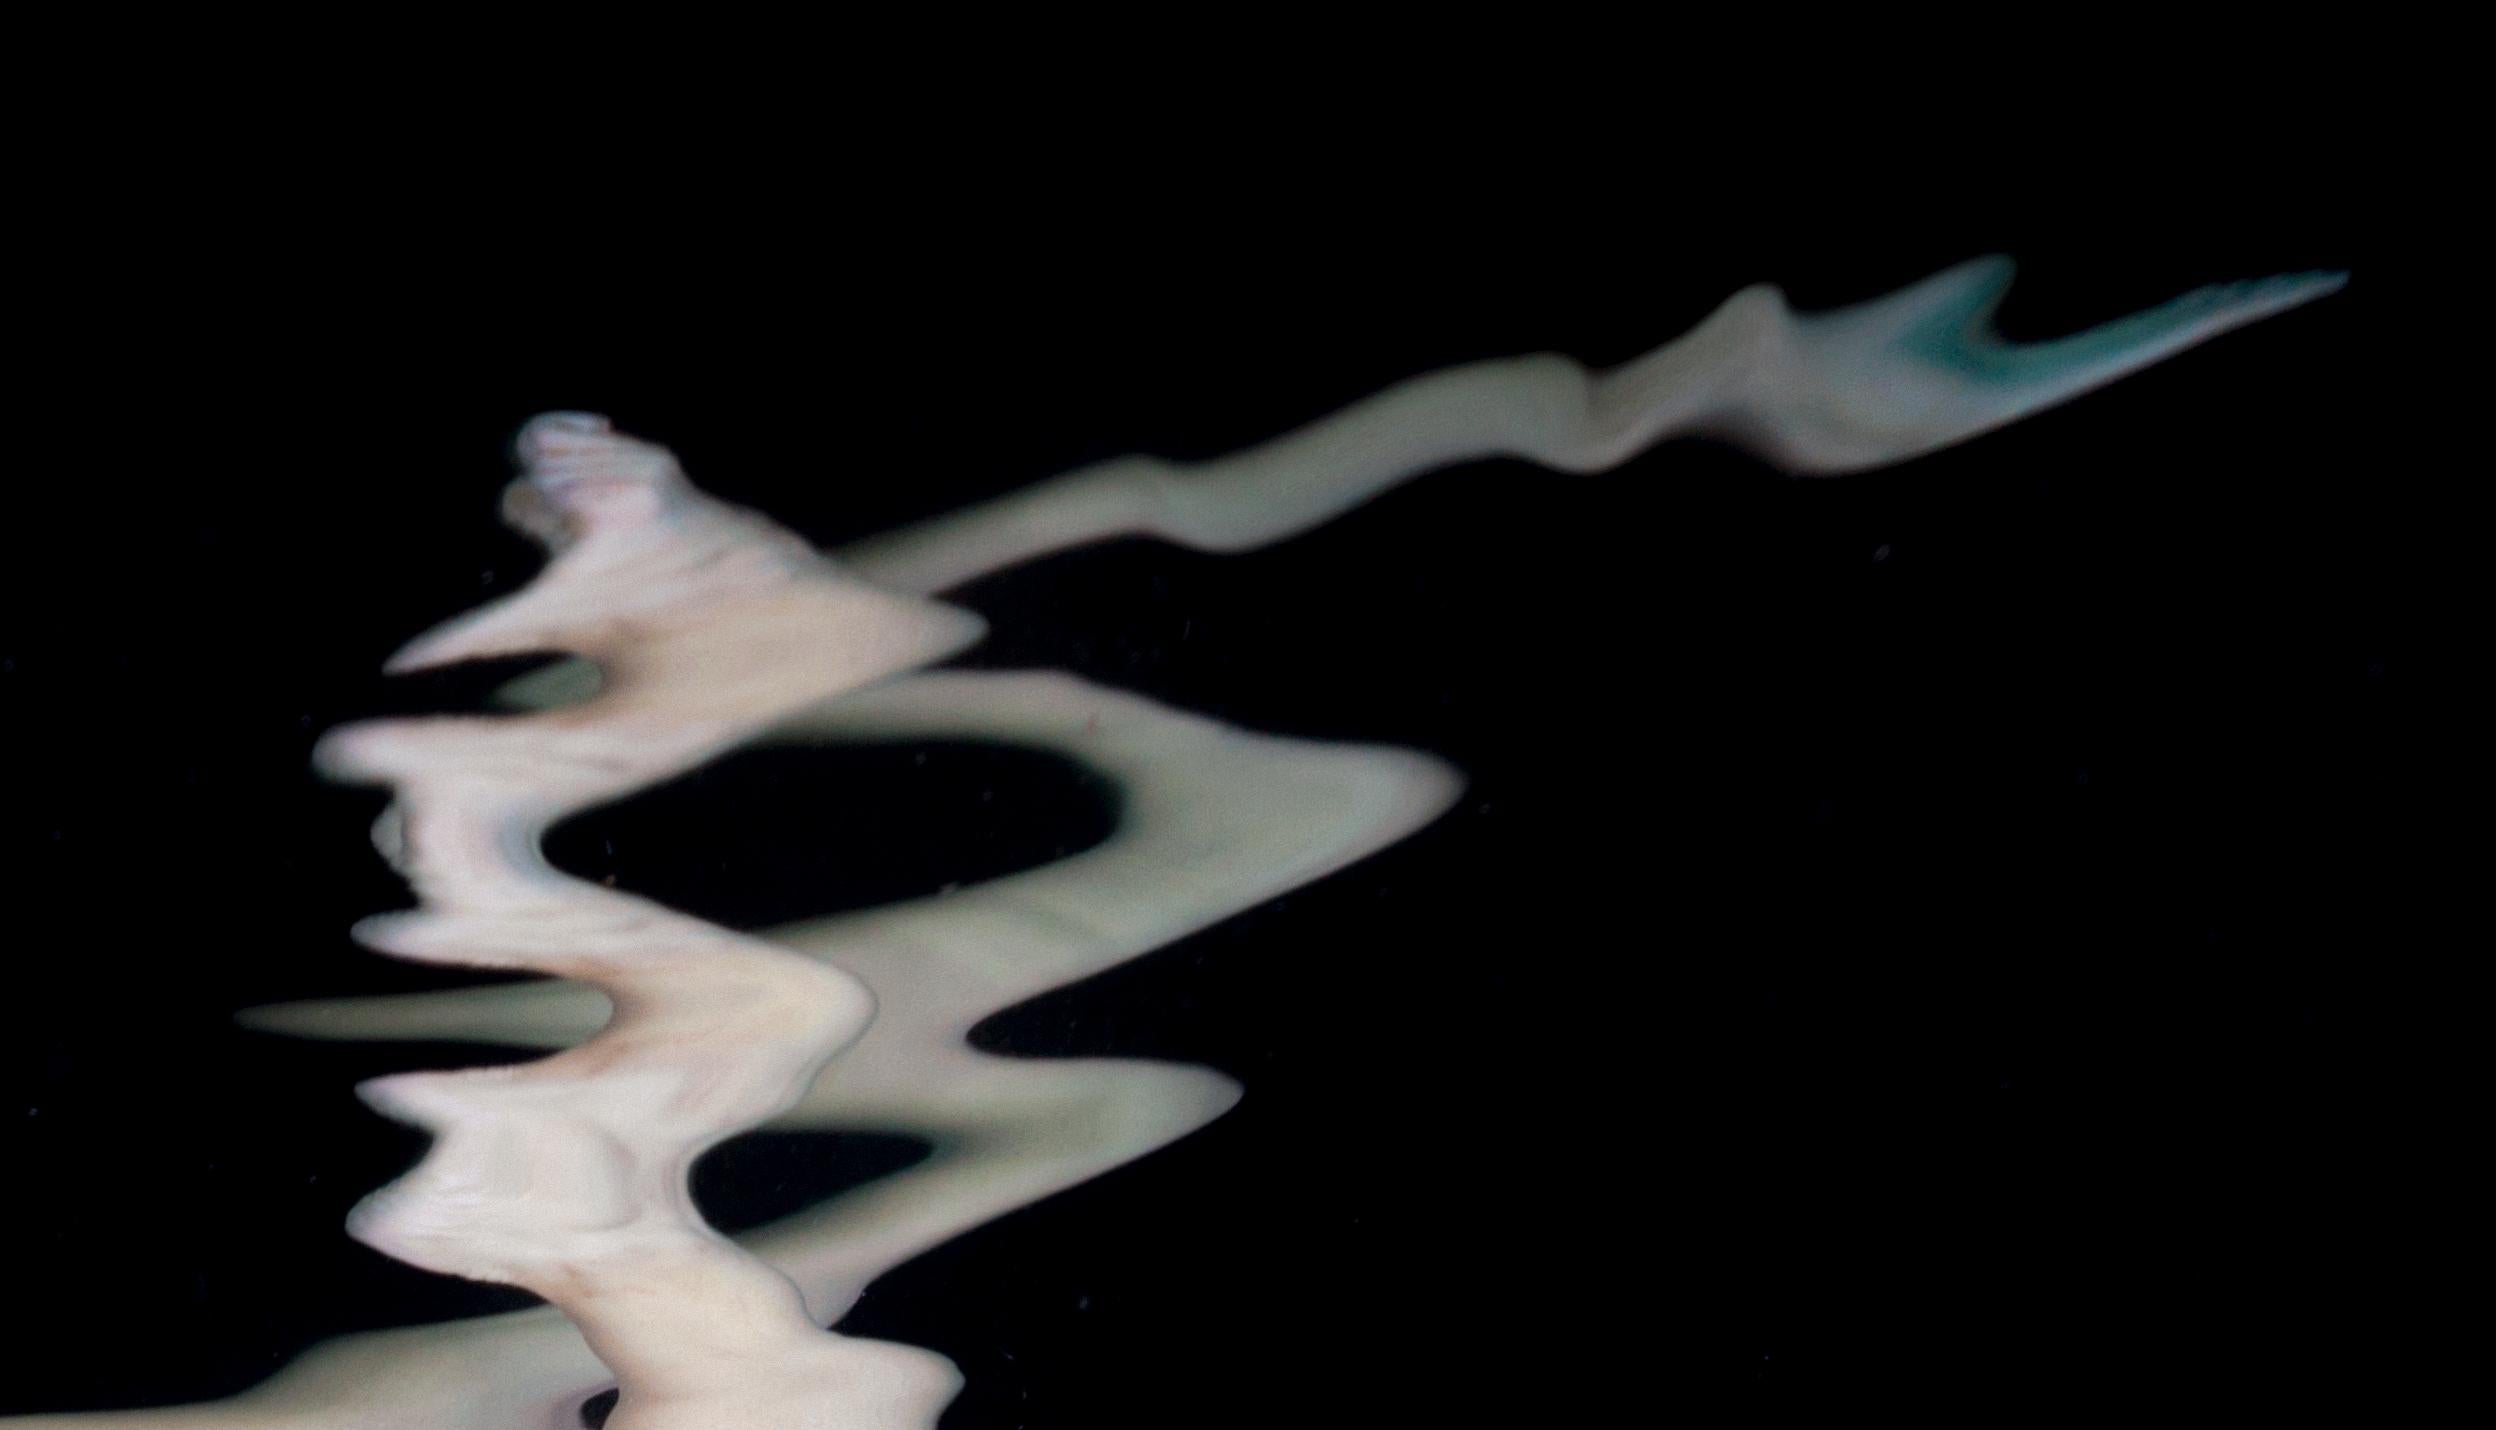 Porcelain II  - underwater nude photograph - acrylic print 24x36